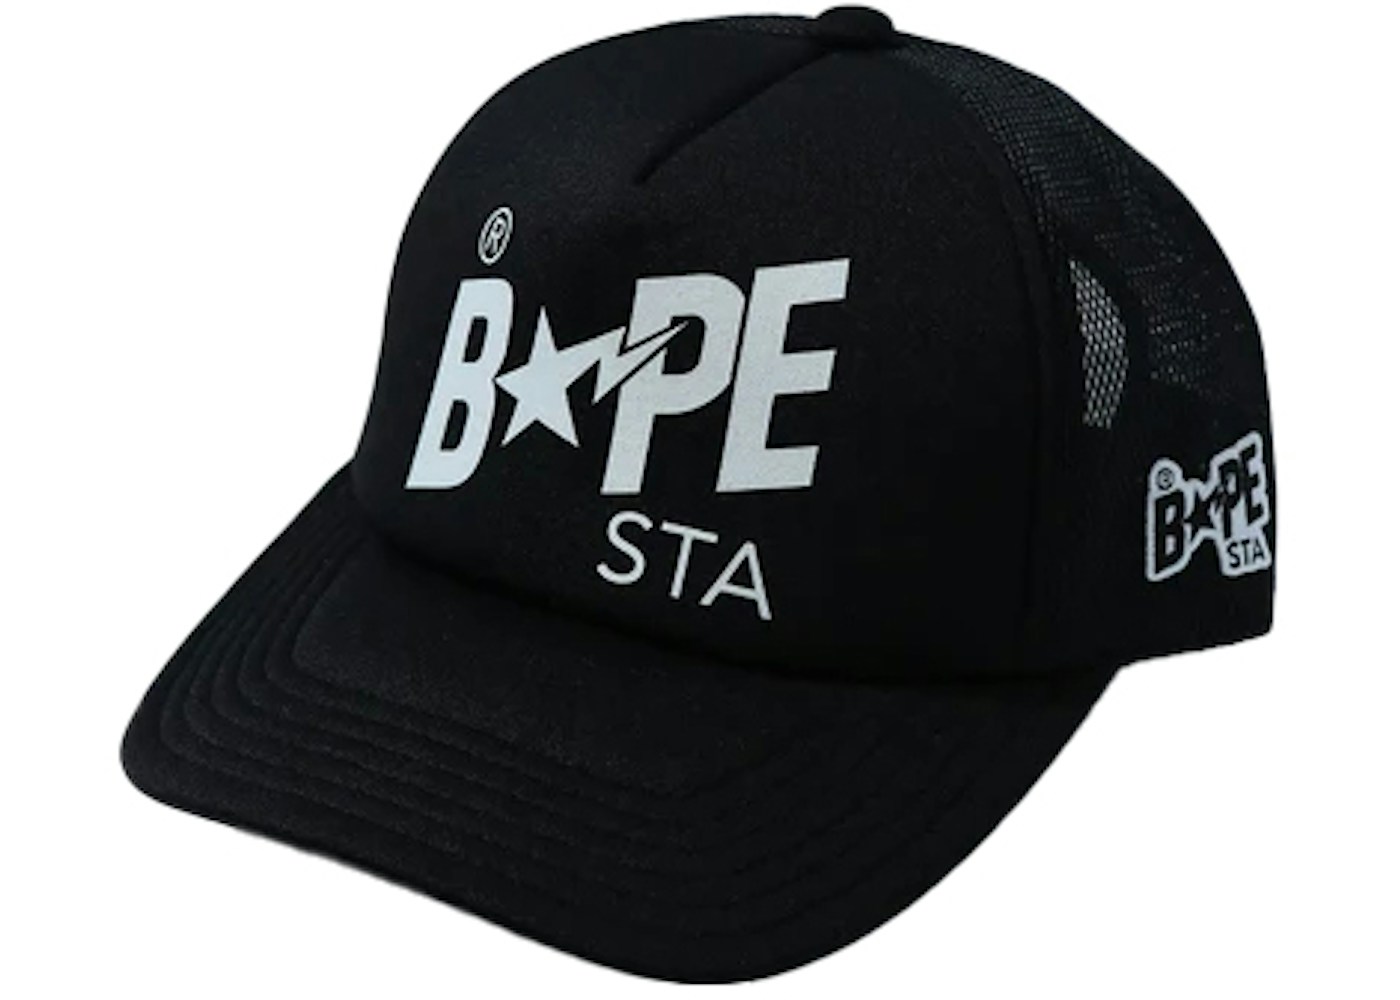 BAPE Sta Mesh Cap (SS21) Black - SS21